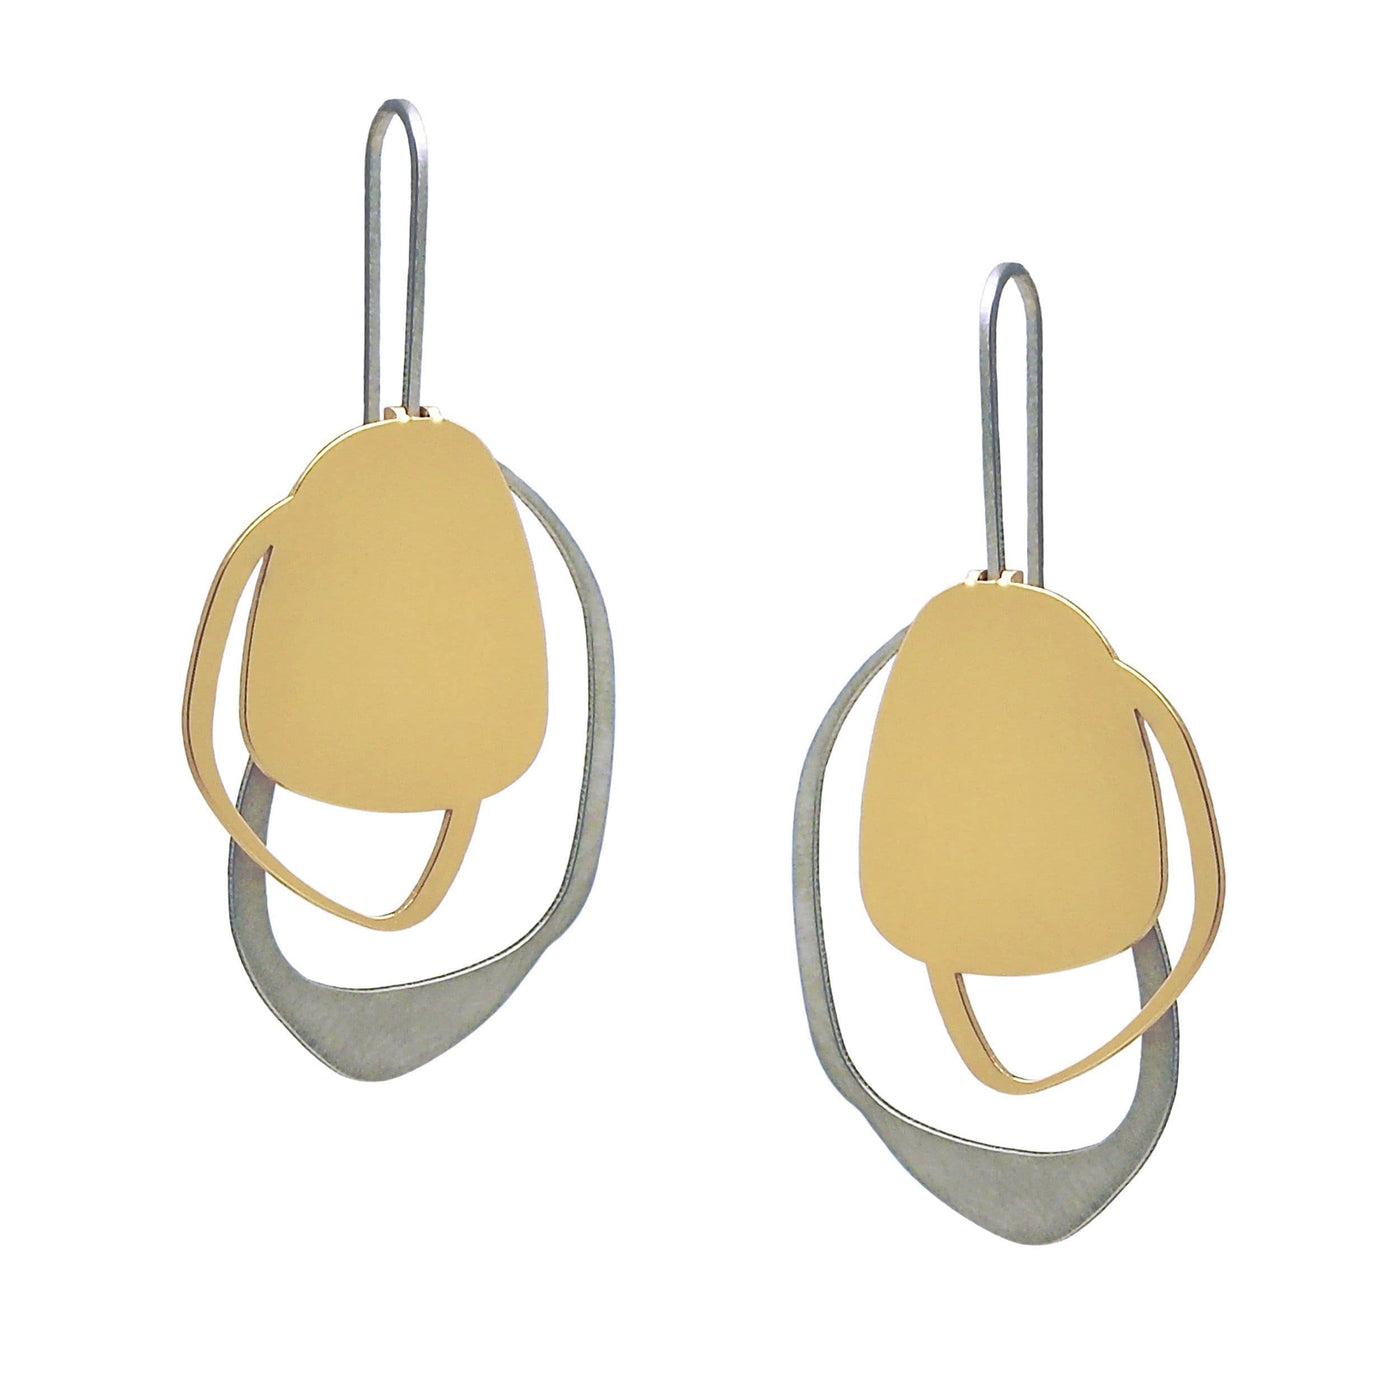 X2 Stone Earrings - Gold/ Black - inSync design